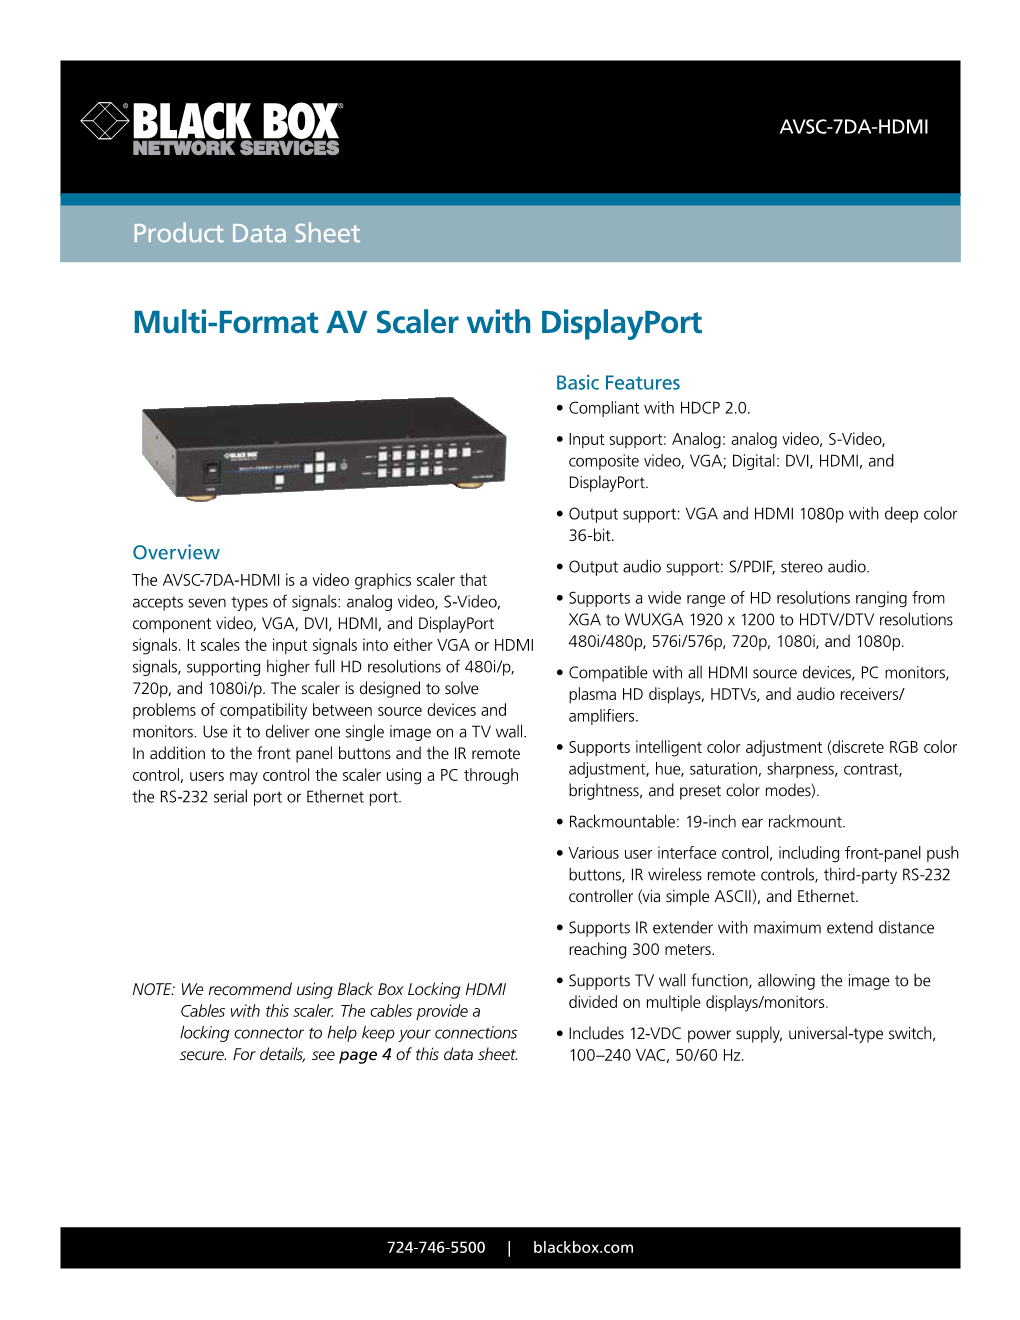 Multi-Format AV Scaler with Displayport ®